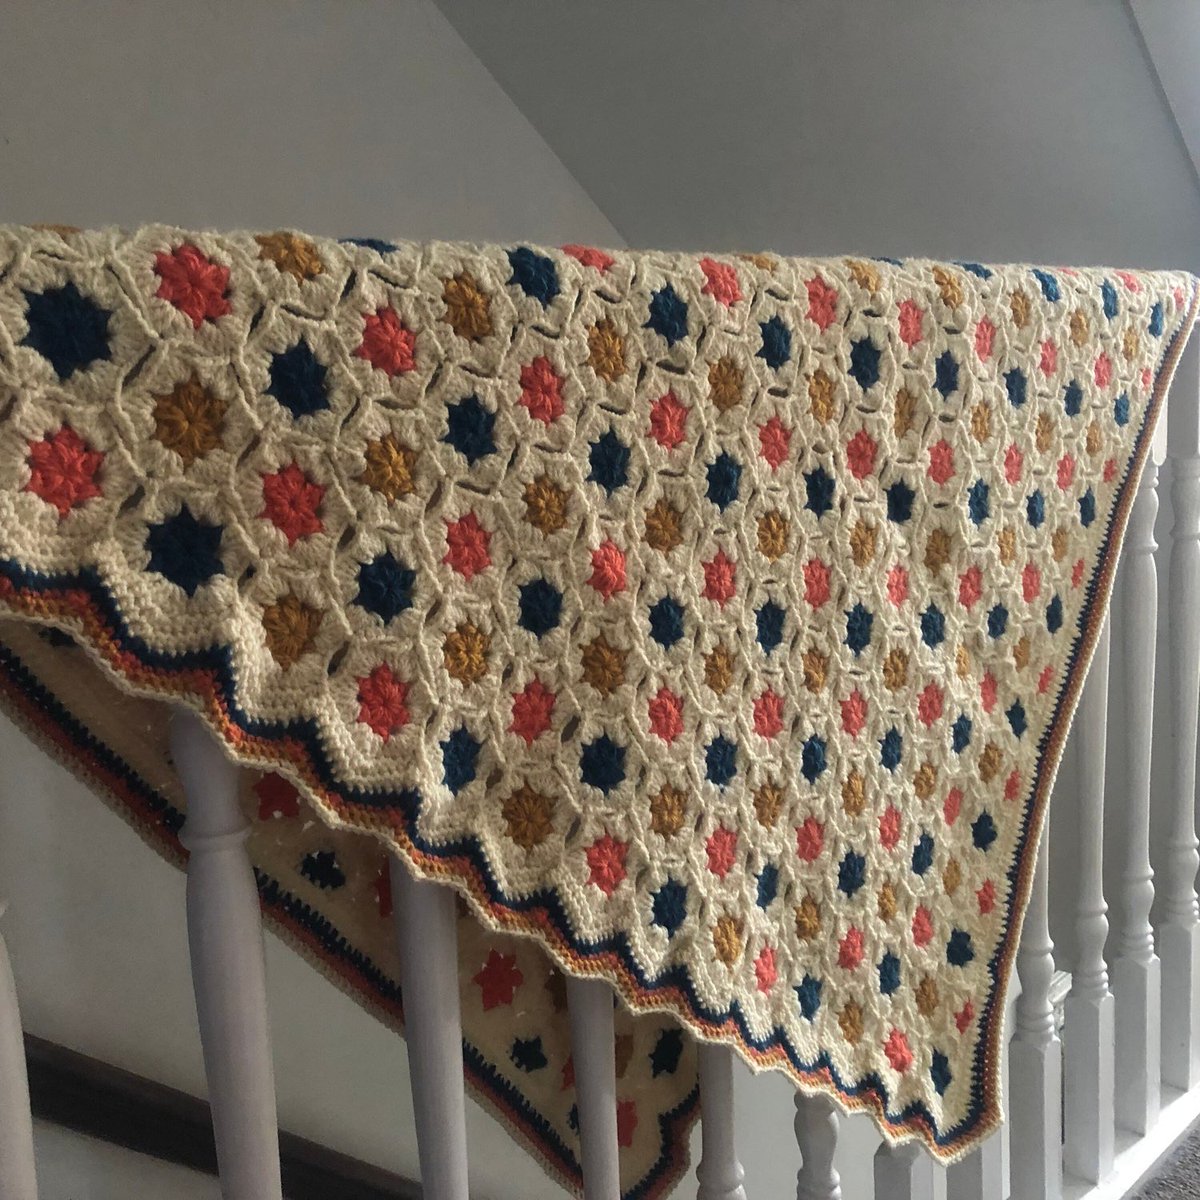 Handmade Crochet Hexagon Blanket #patchwork #MHHSBD #wip #countryfarmhouse #UKGiftHour #craftbizparty 
#UKGiftAm #magic #cosy 
#SmartSocial #crochetgift #homewear #hexagons #handmadeblanket #yarn etsy.me/3o4ceN1